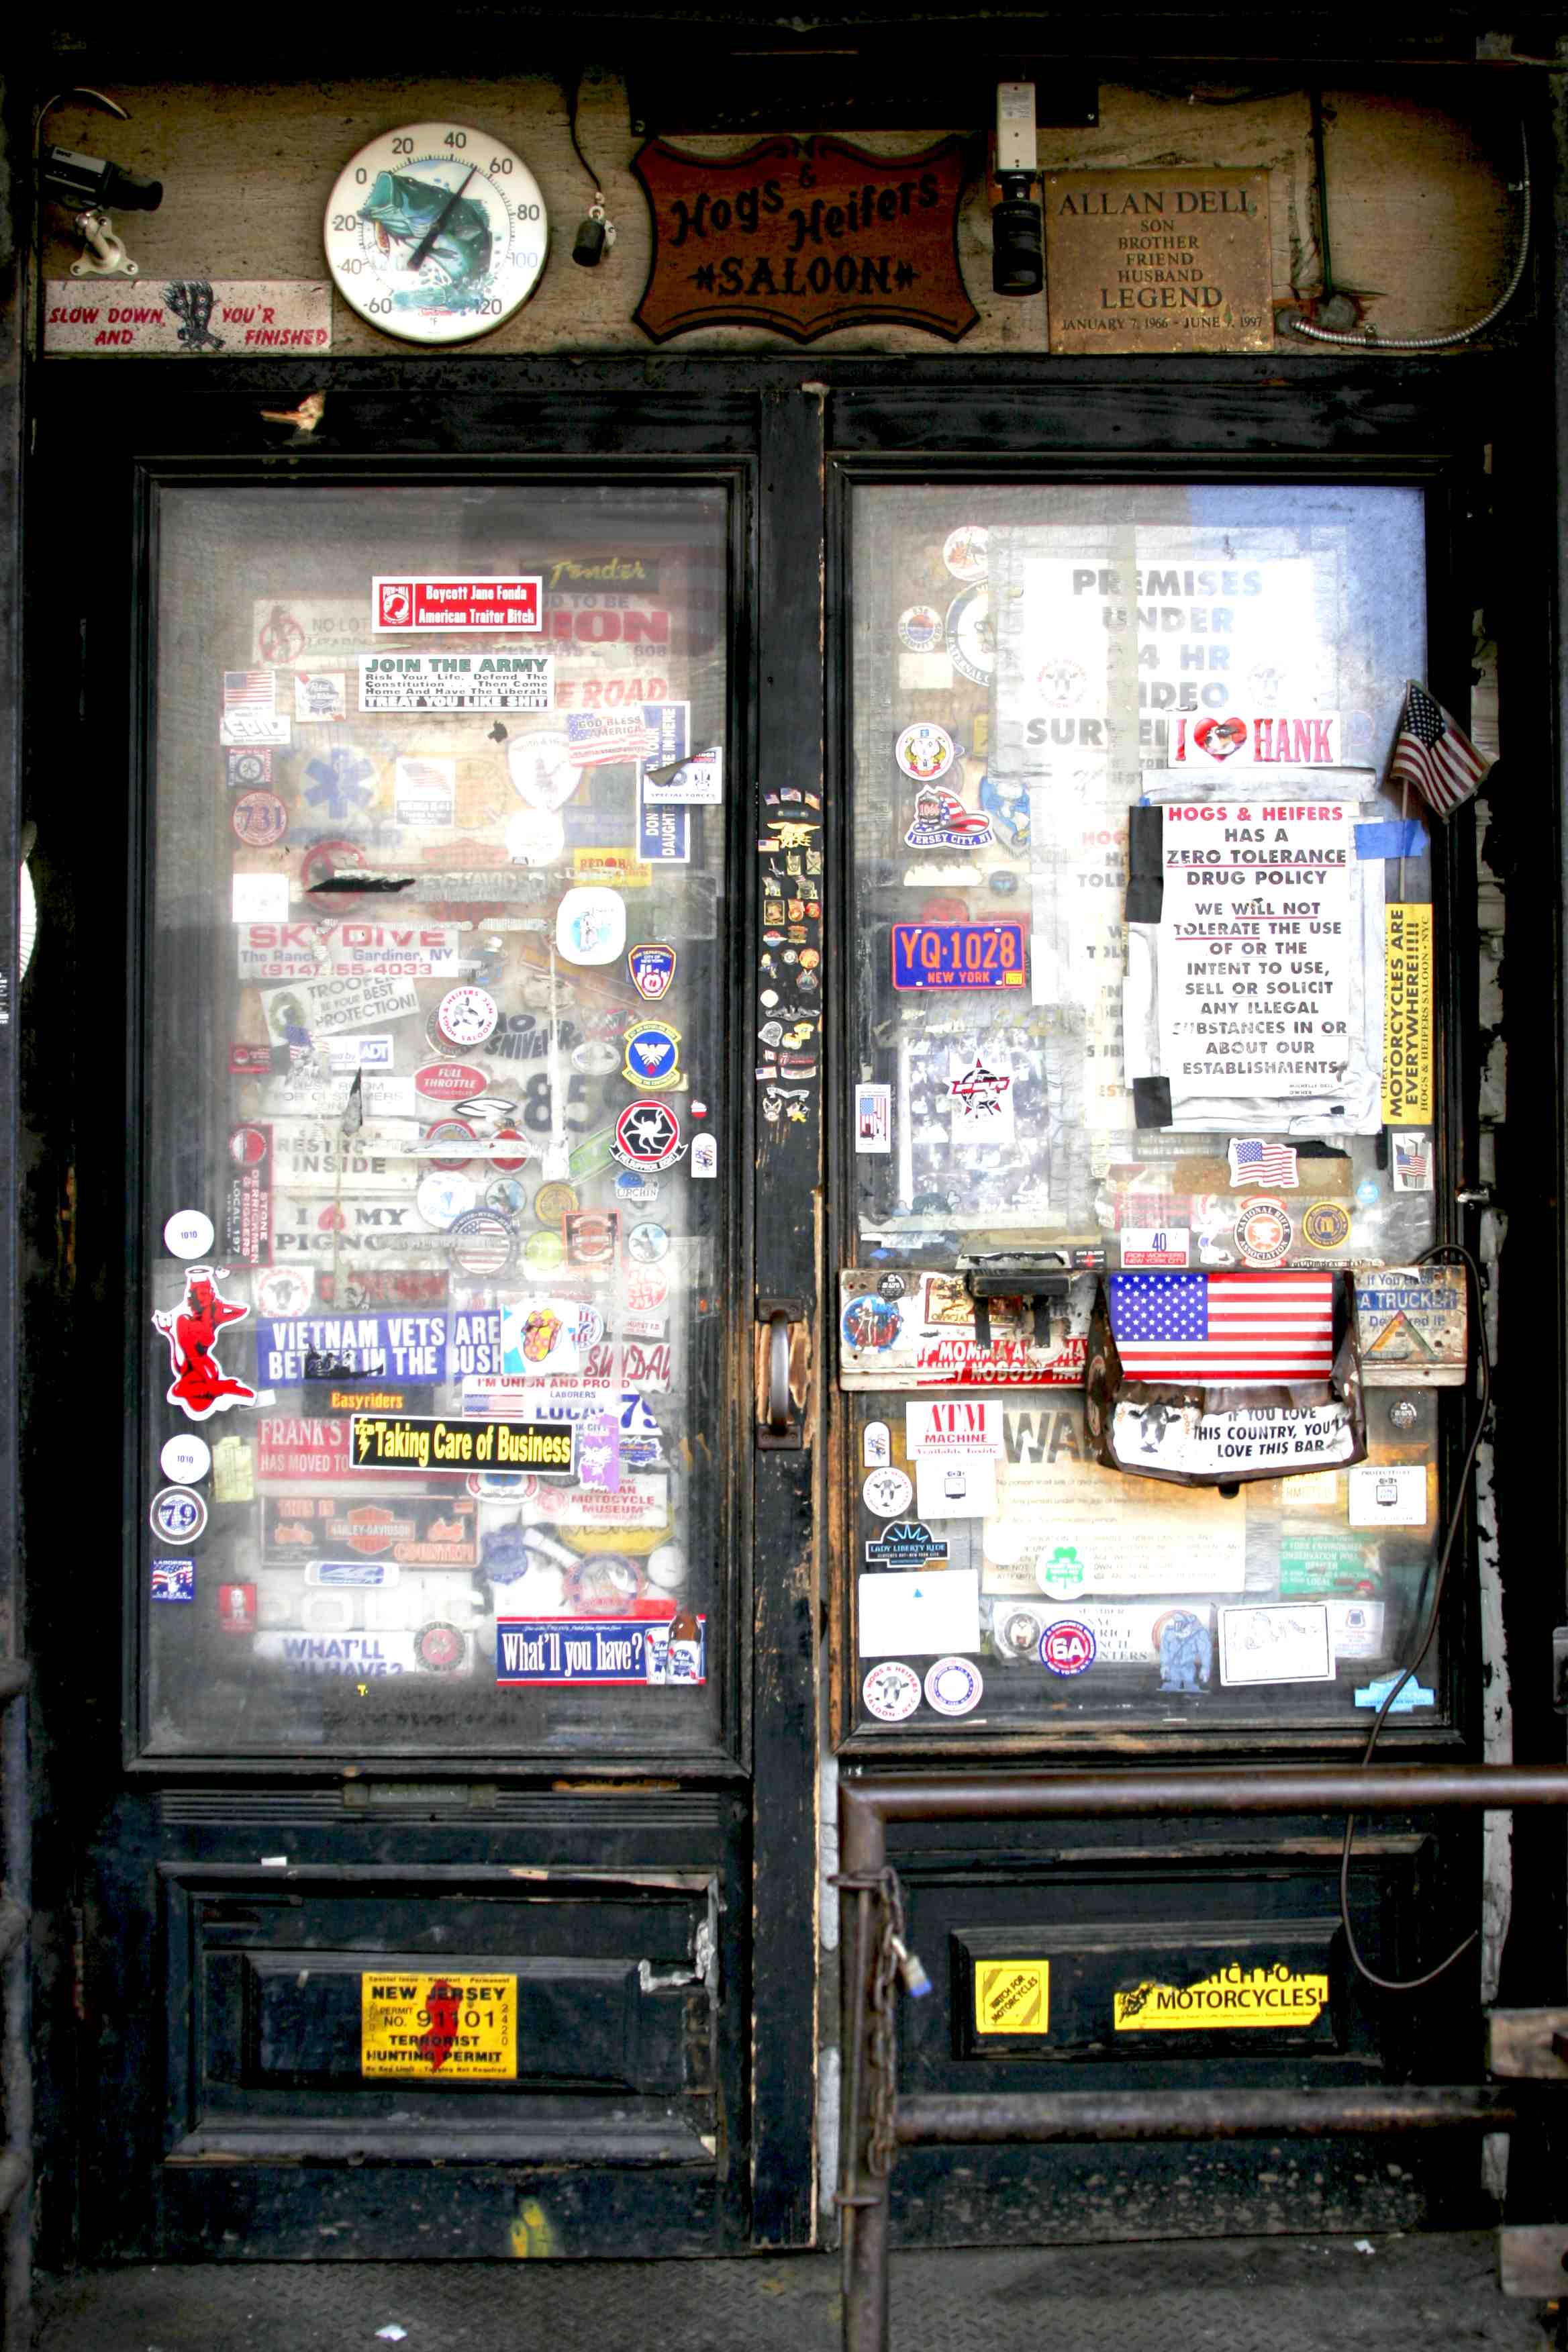 W-New York 2 Doors.jpg